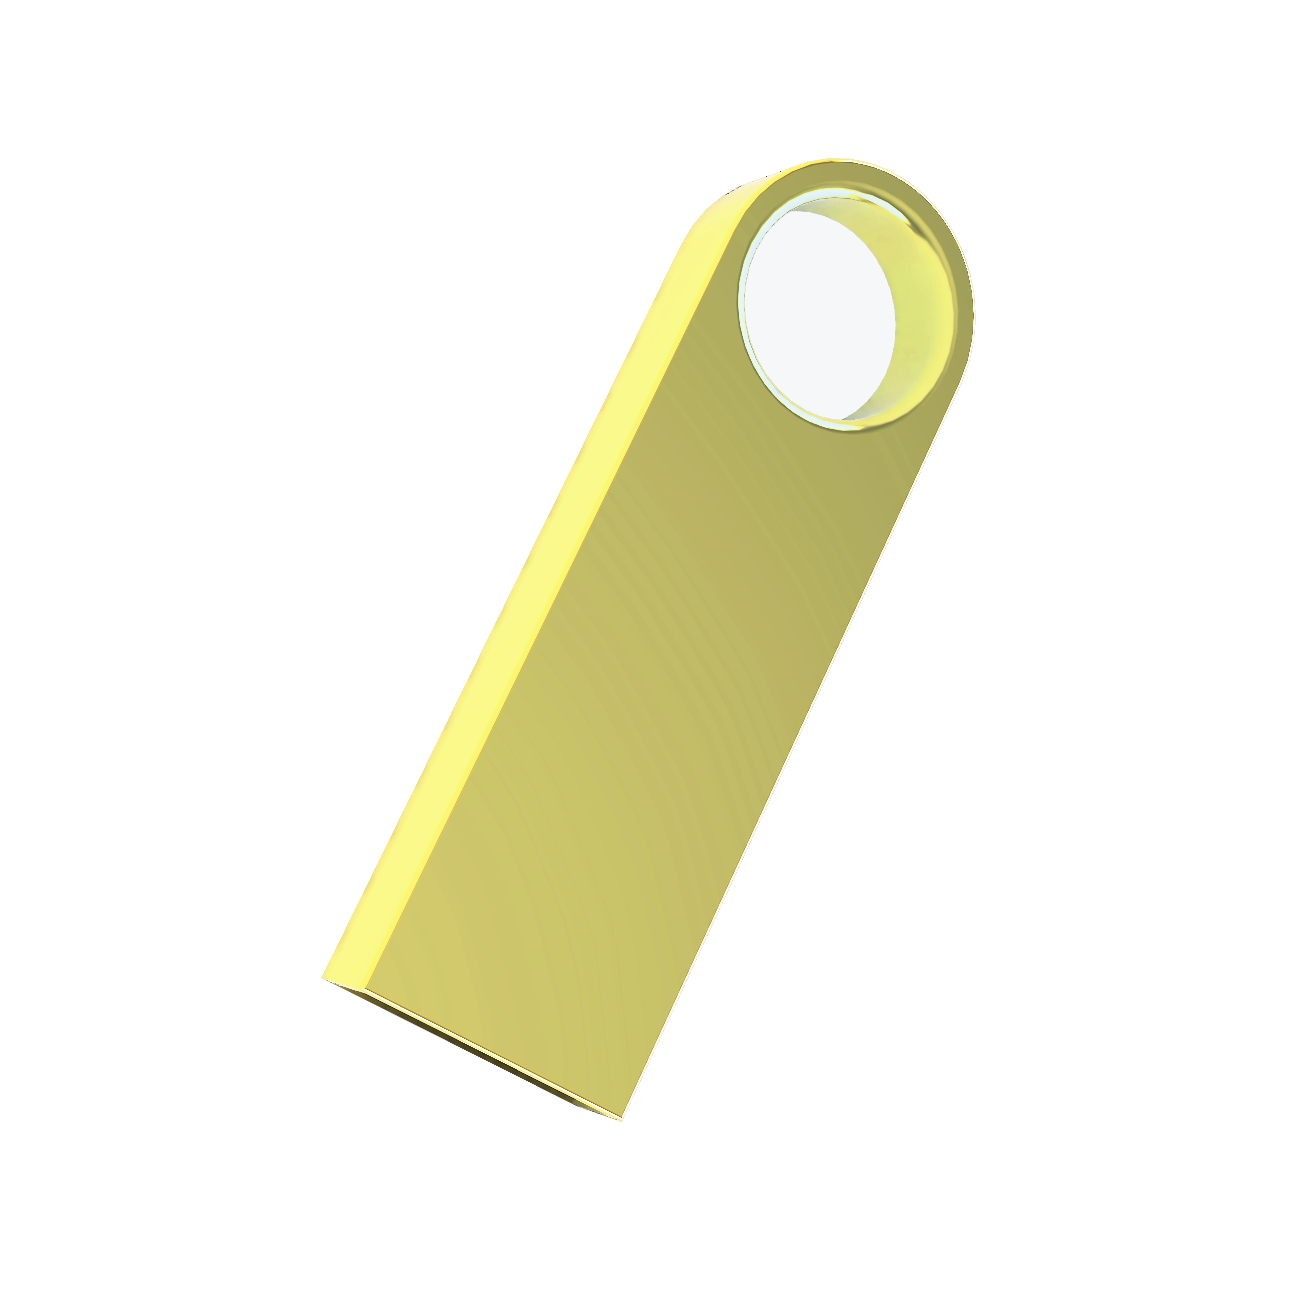 32 ® USB-Stick GERMANY USB (Gold, SE09 GB)